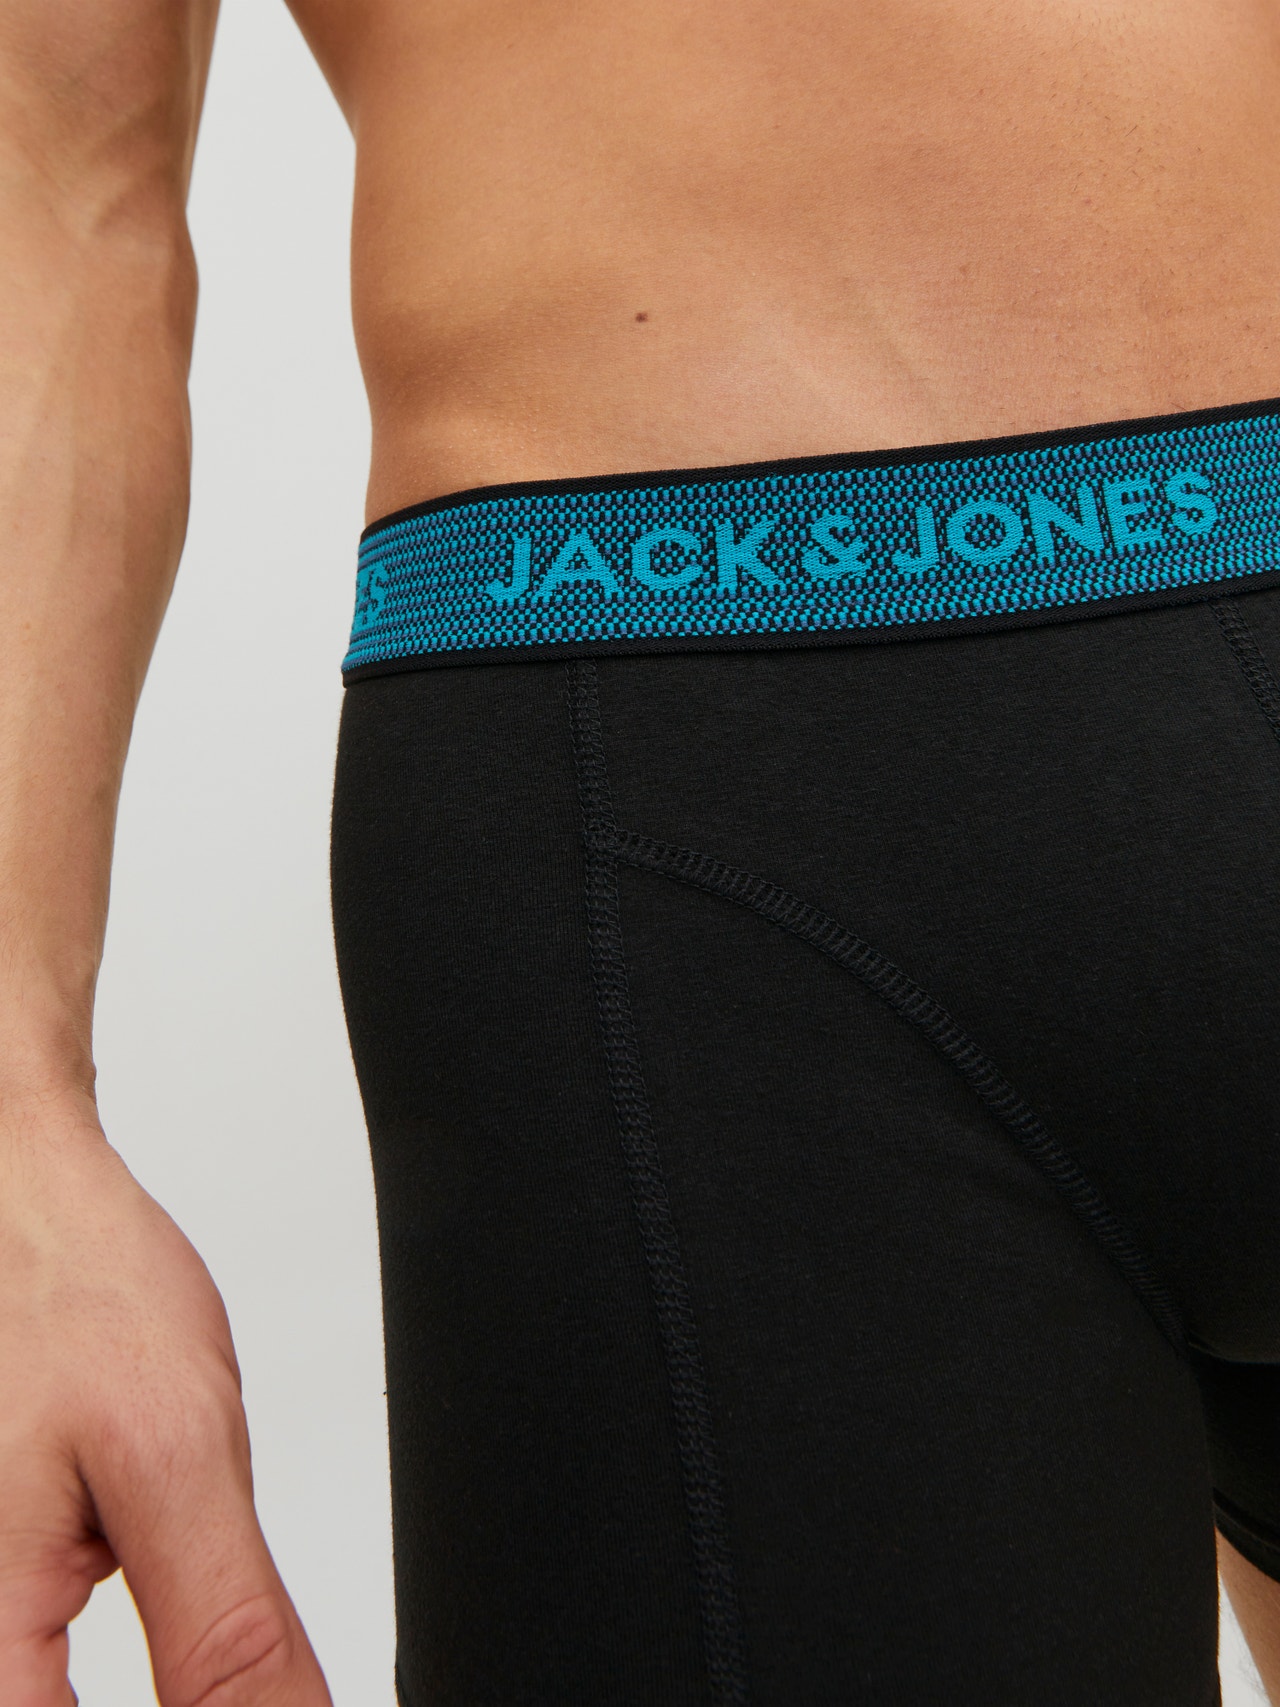 Jack & Jones 3-pack Plain Boxers -Asphalt - 12127816